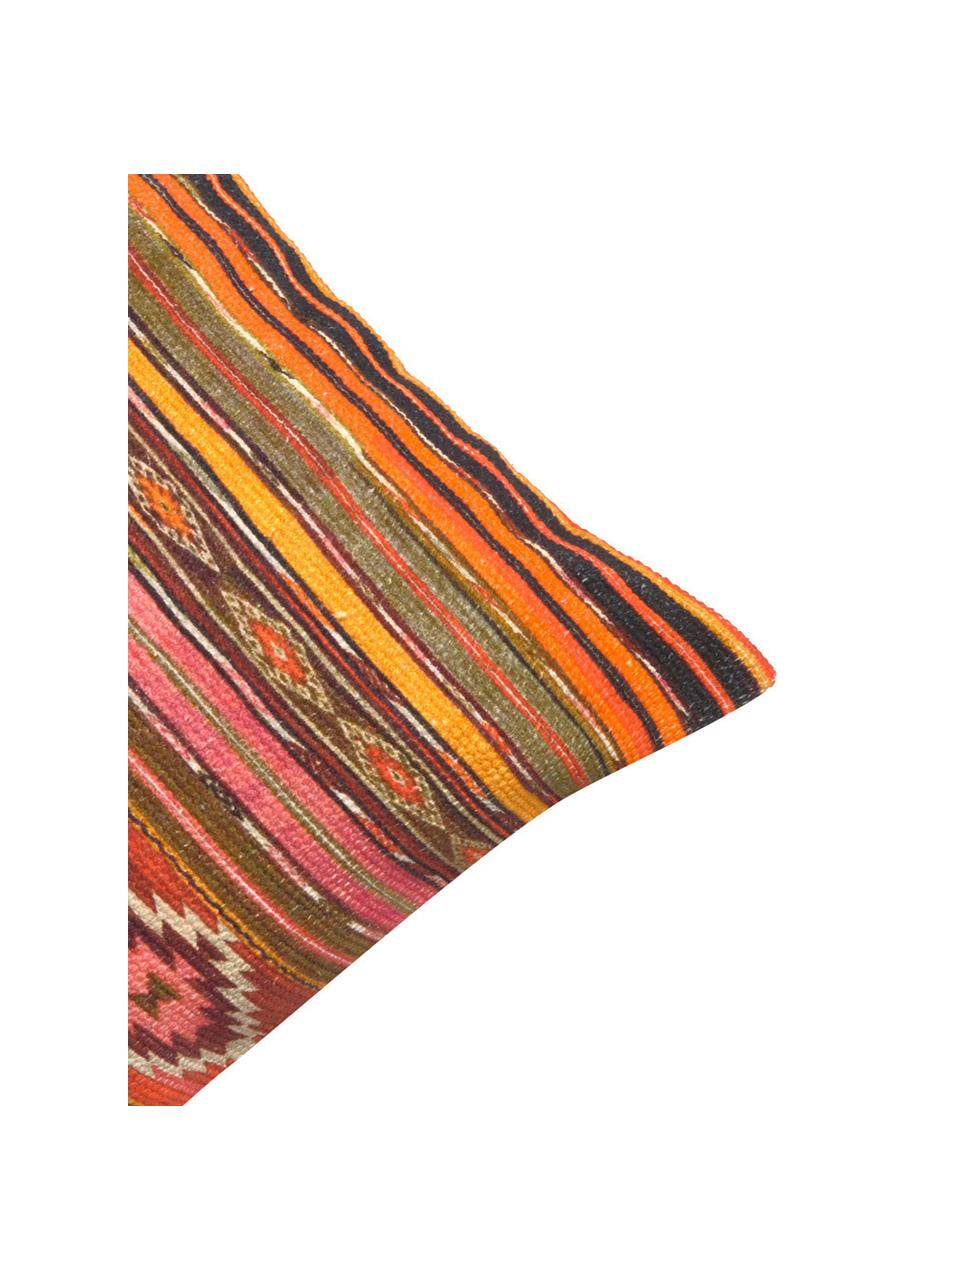 Kussenhoes Kusa met ethnopatroon, 100% katoen, Multicolour, 45 x 45 cm